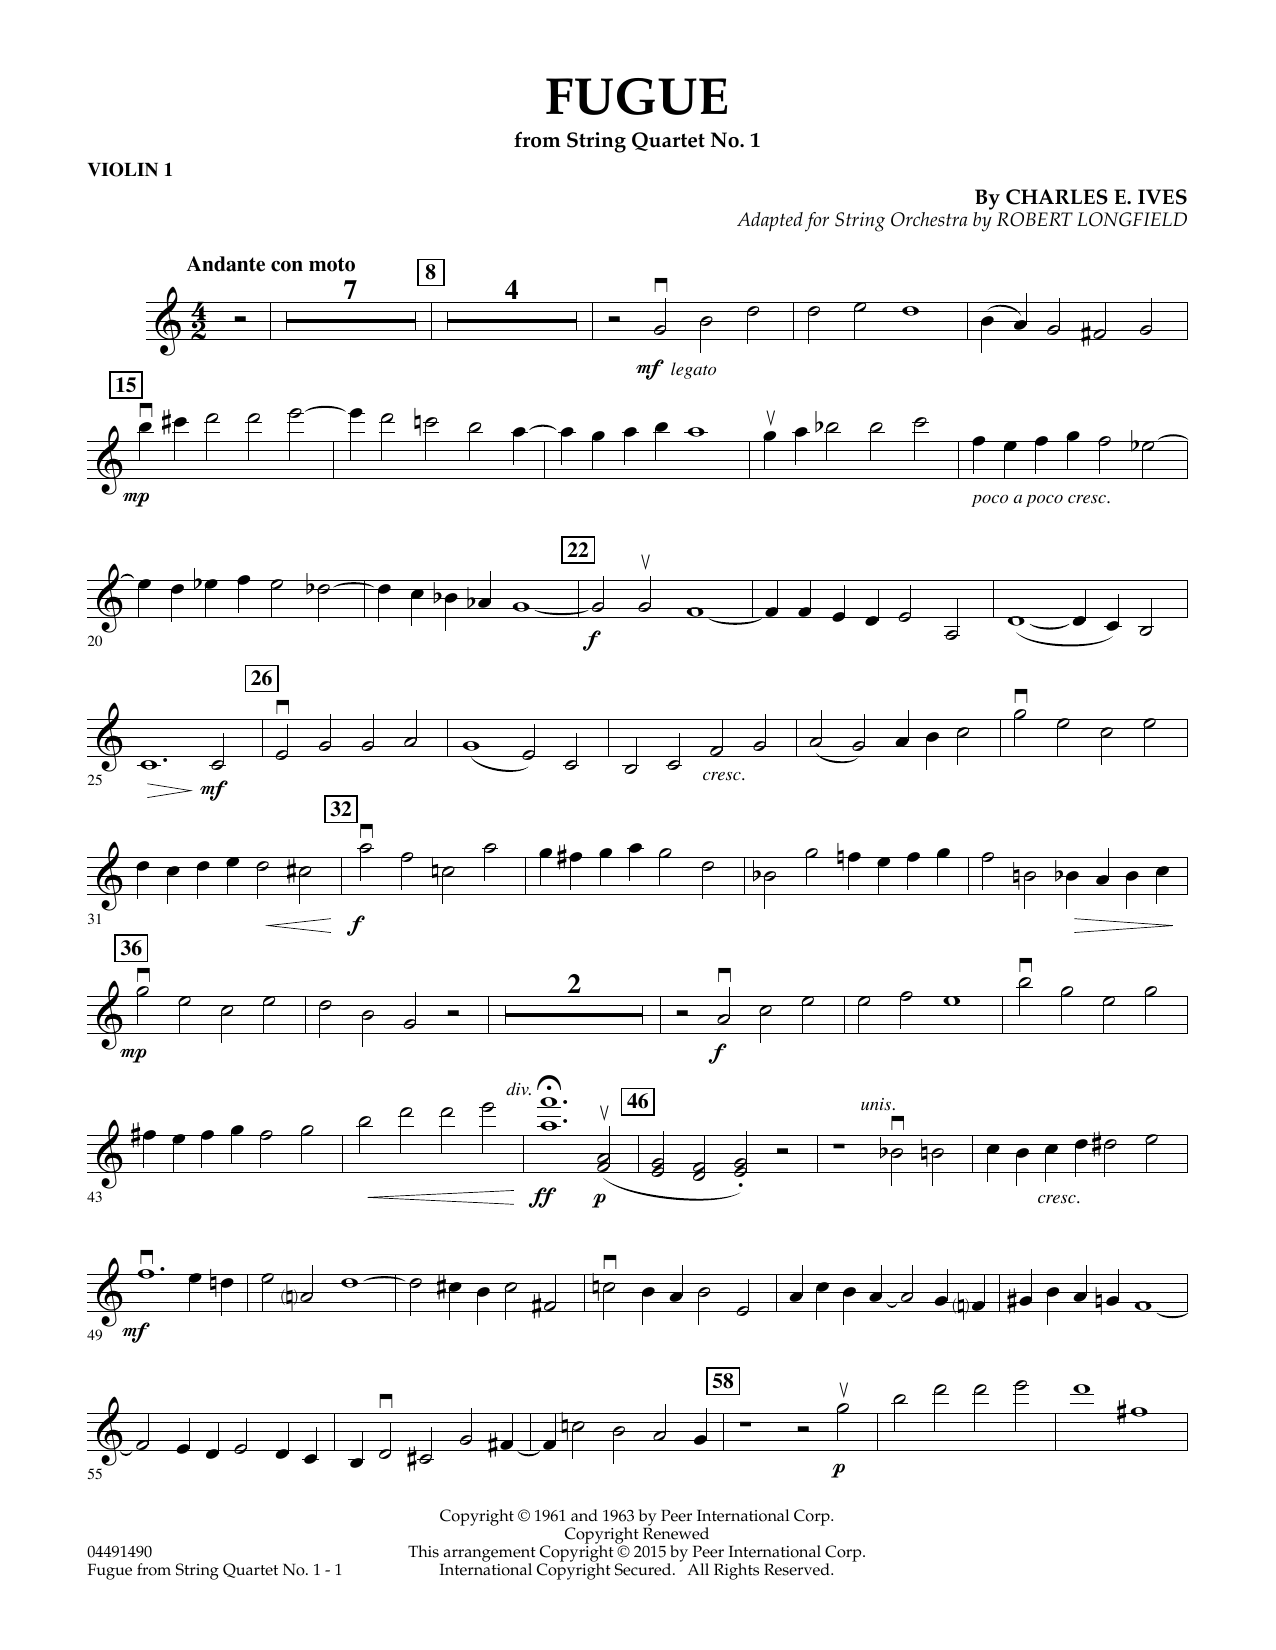 Download Robert Longfield Fugue from String Quartet No. 1 - Violi Sheet Music